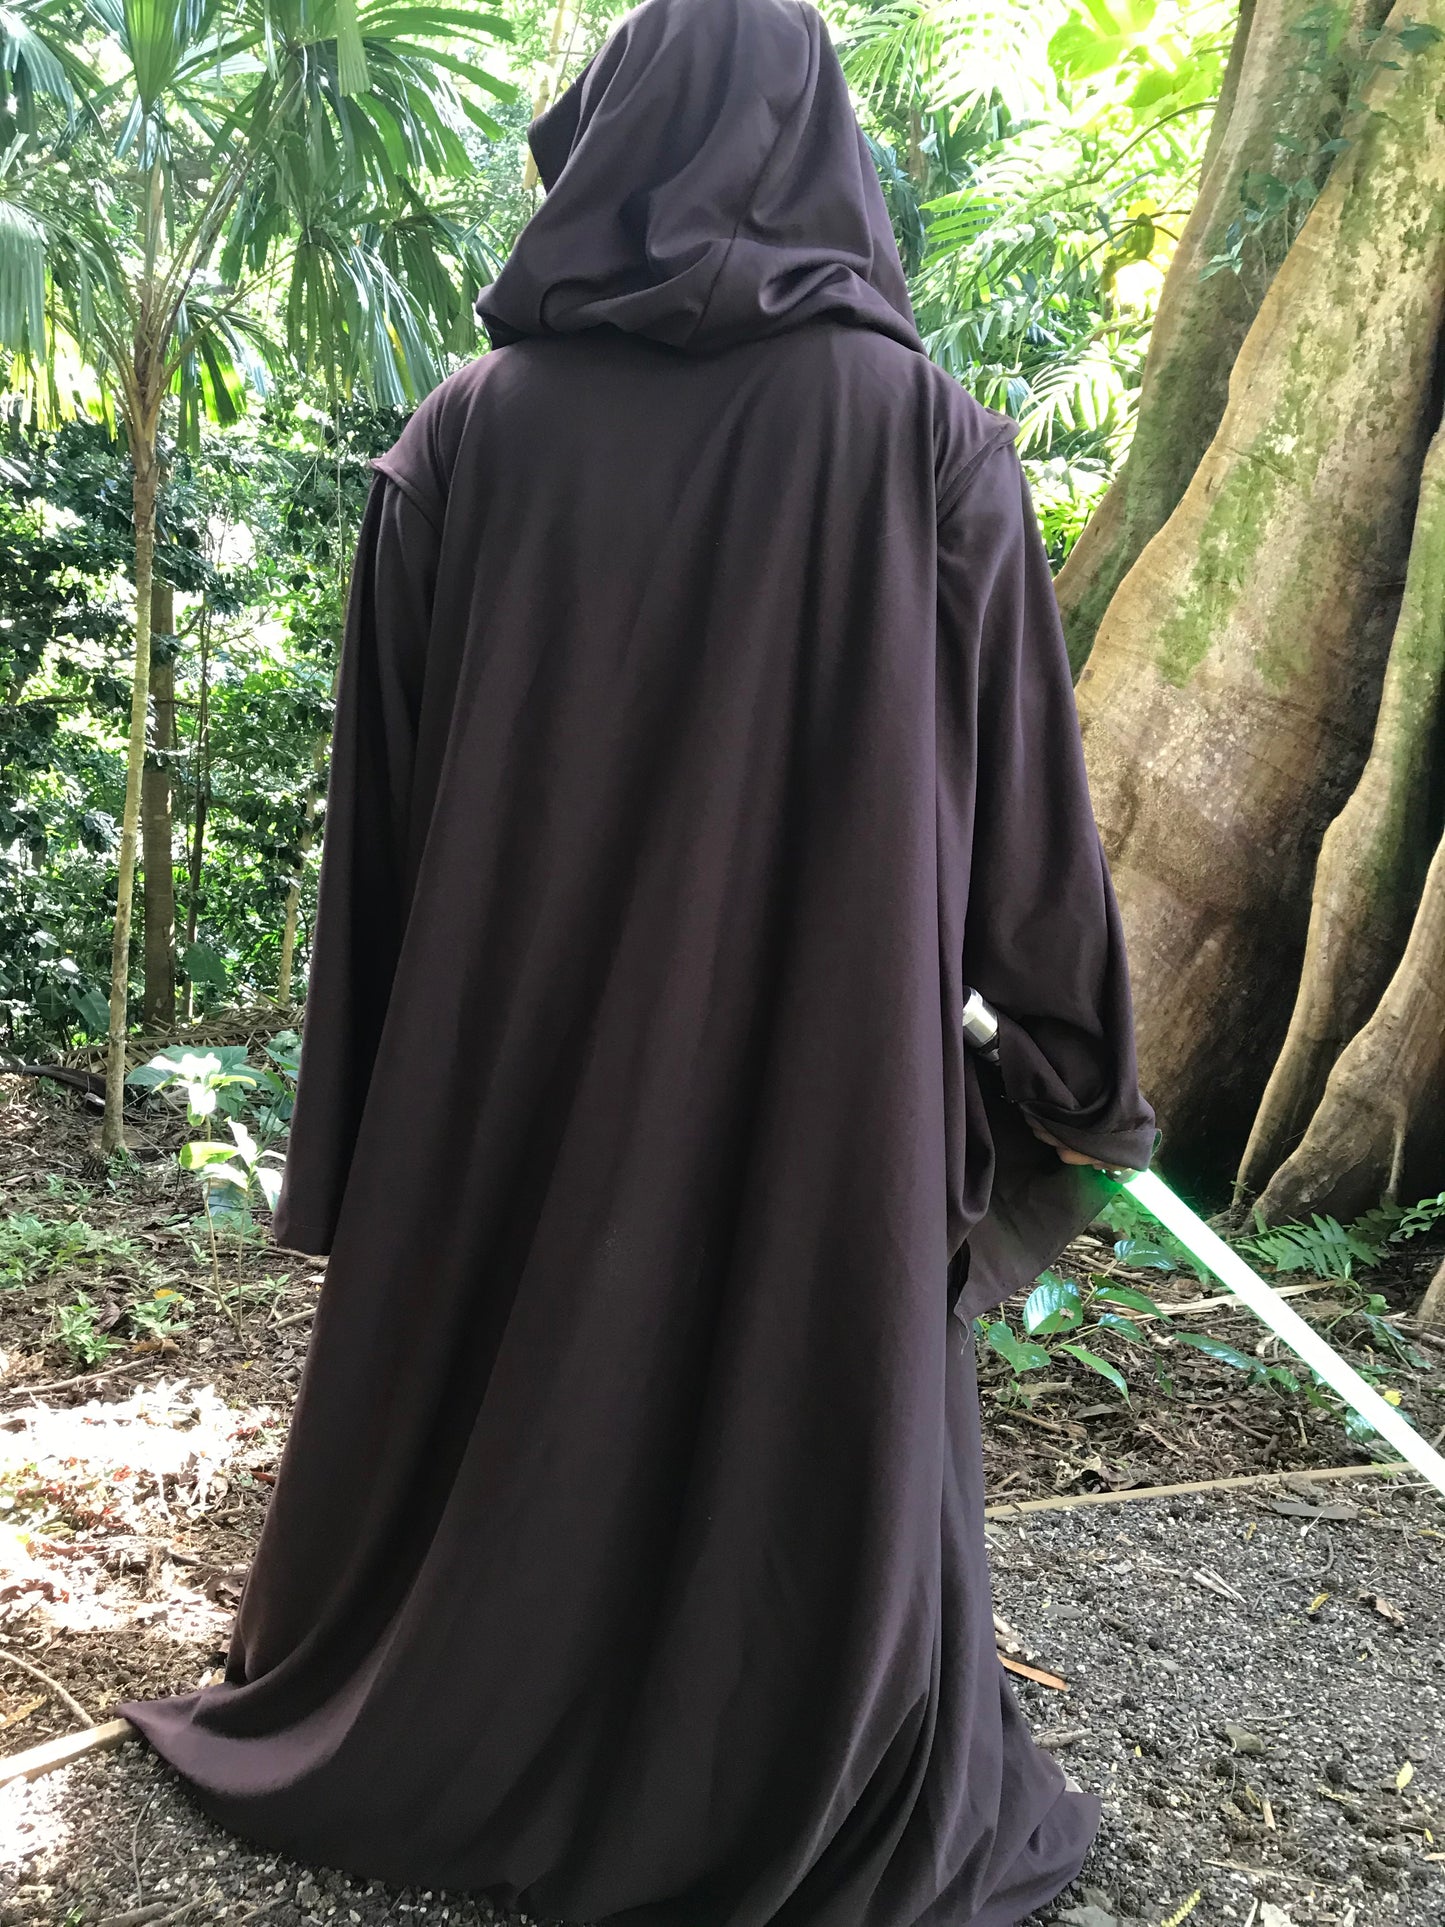 star wars costume jedi robe custom costume made by spare time cosplay jedi robe